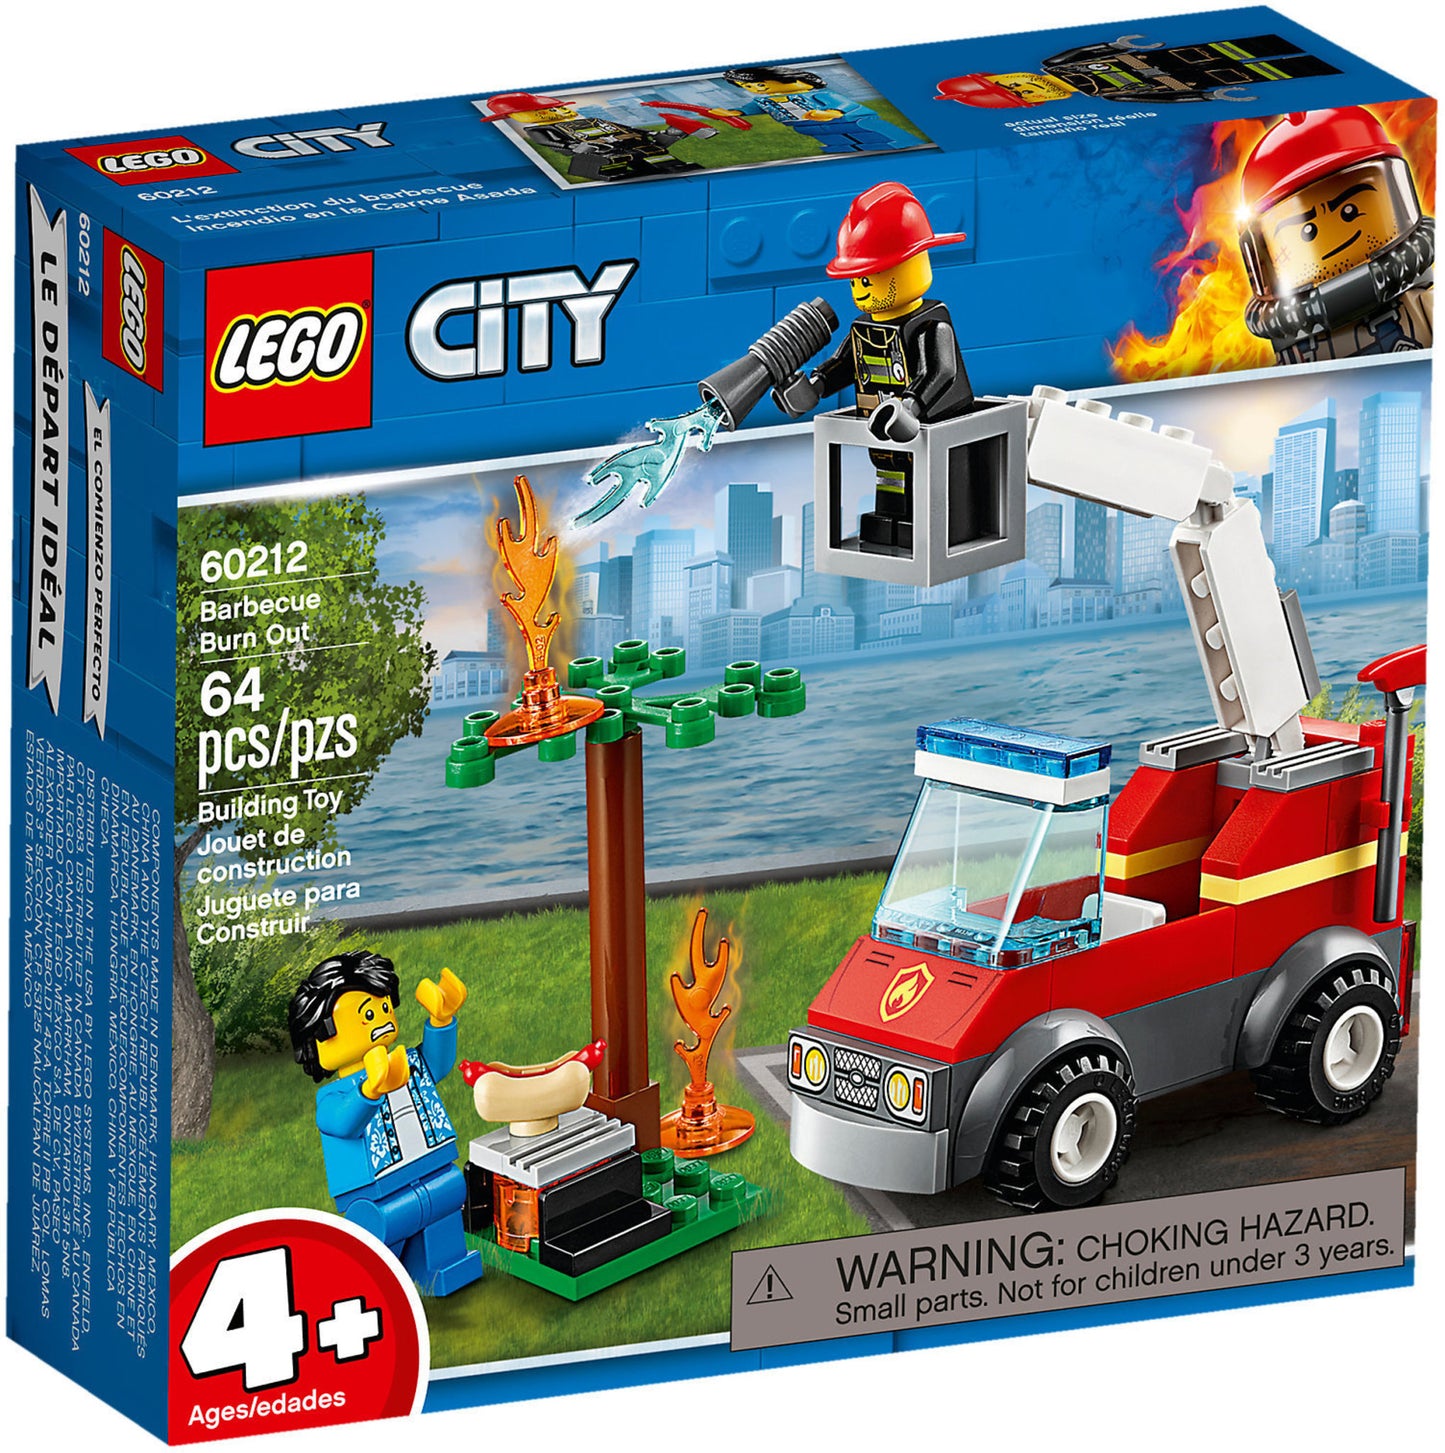 60212 LEGO City - Barbecue In Fumo